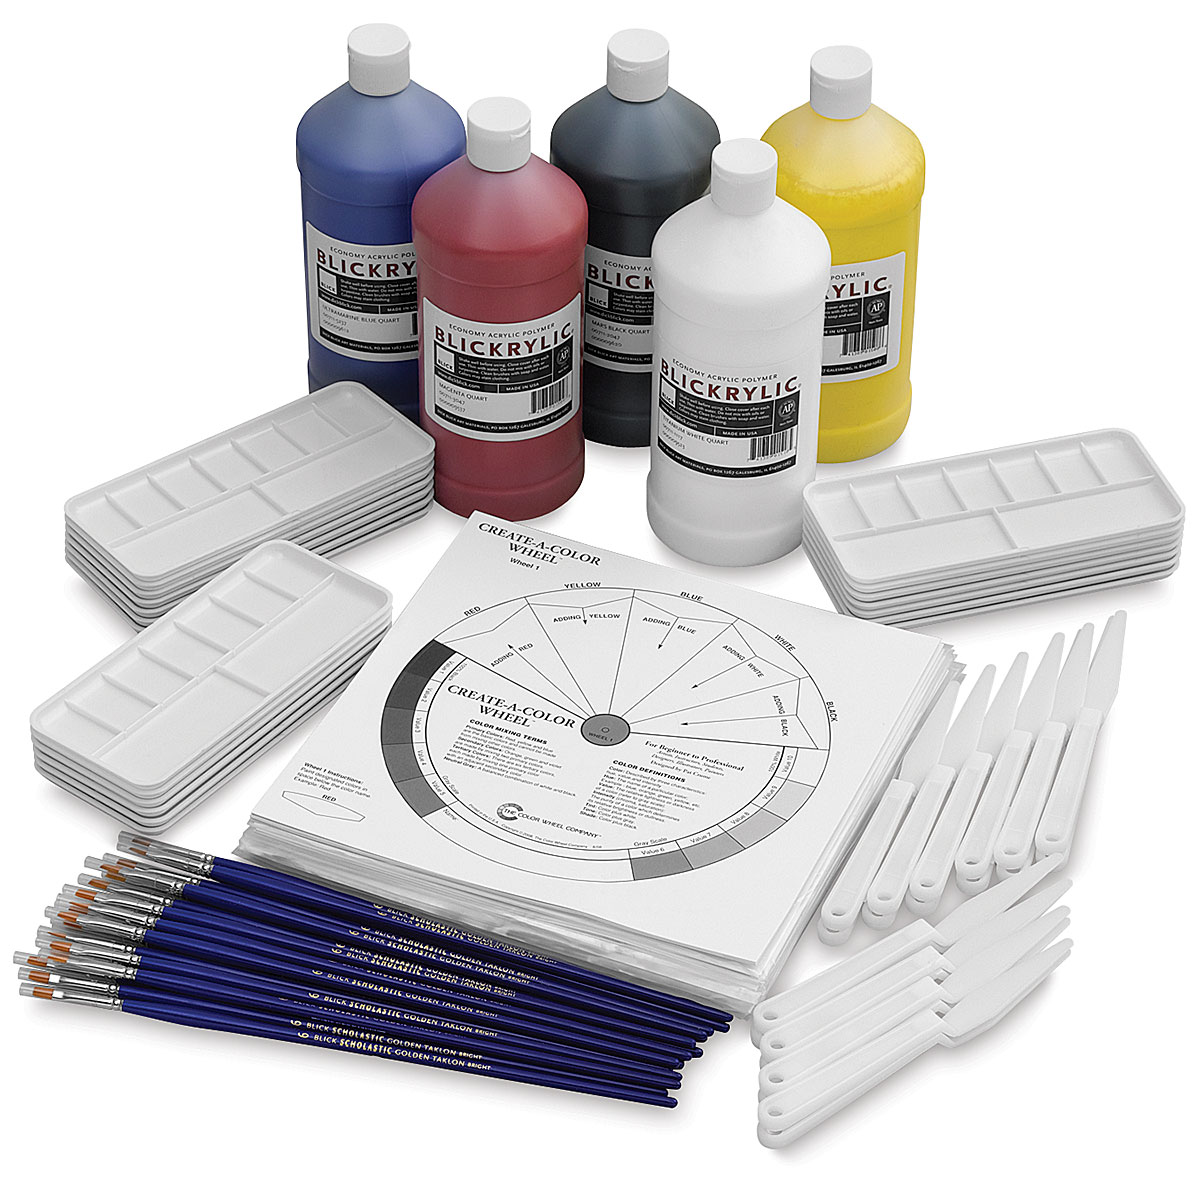 Blick Liquid Watercolors - Painting Class Kit, Set of 10 Colors, 8 oz Bottles